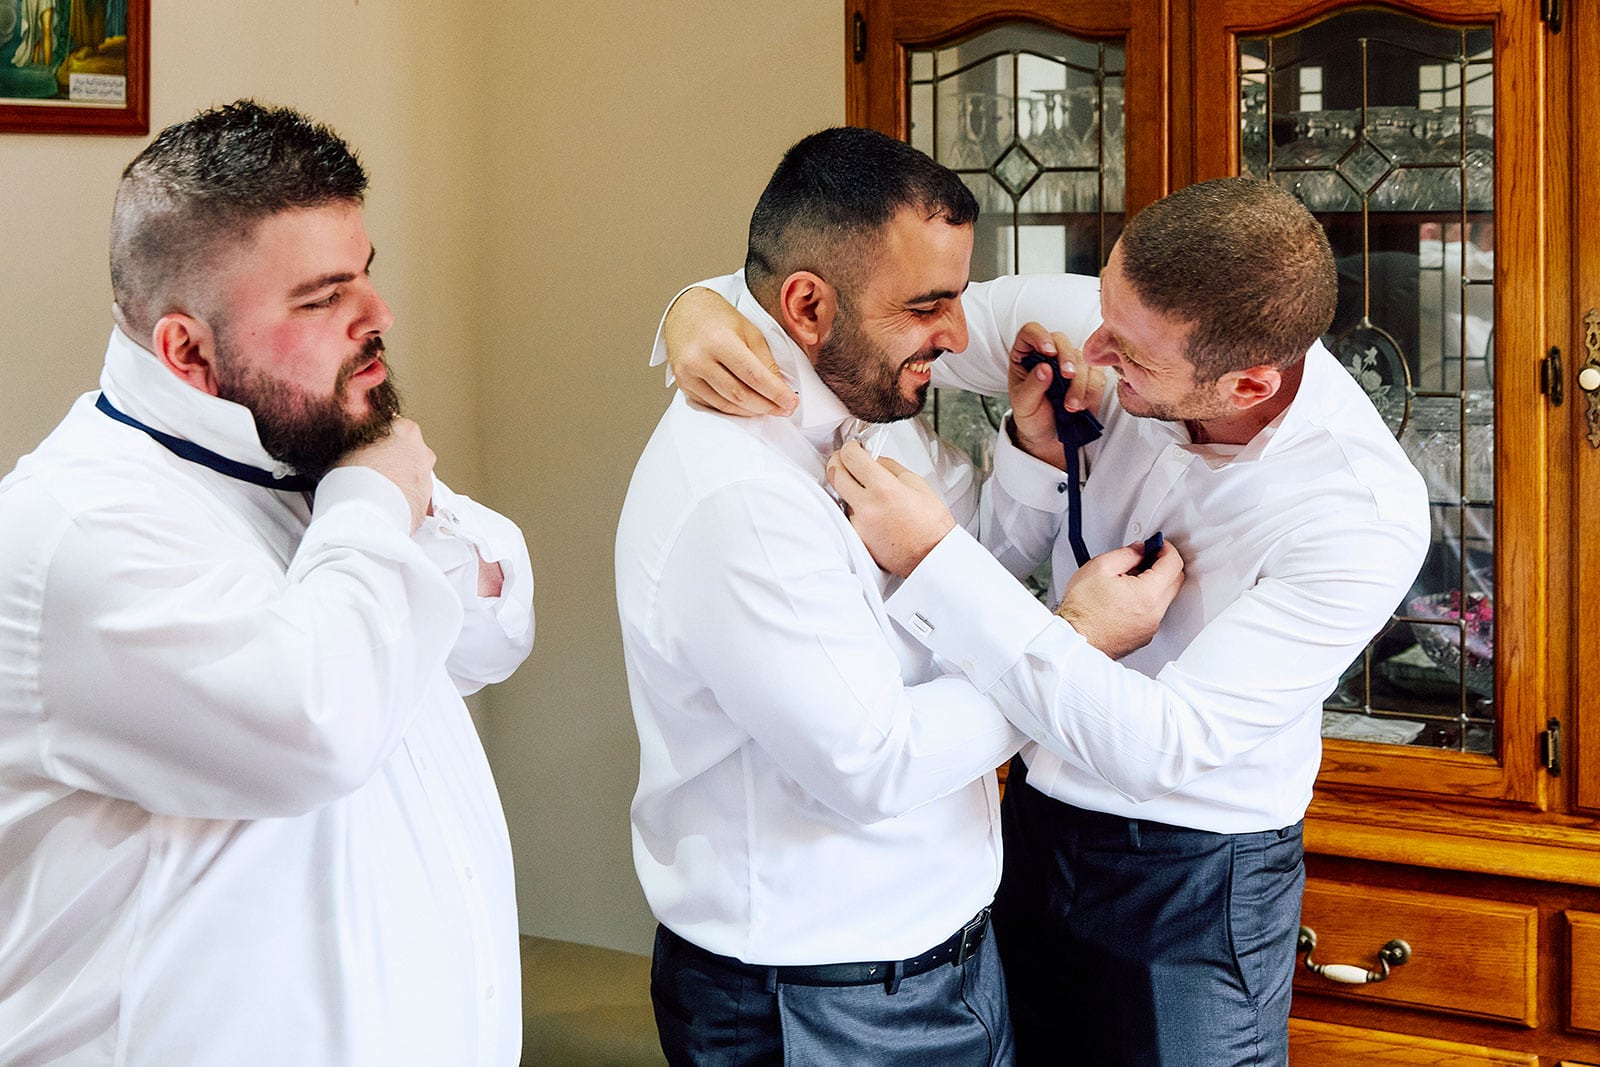 the Groom mucking around with his groomsmen